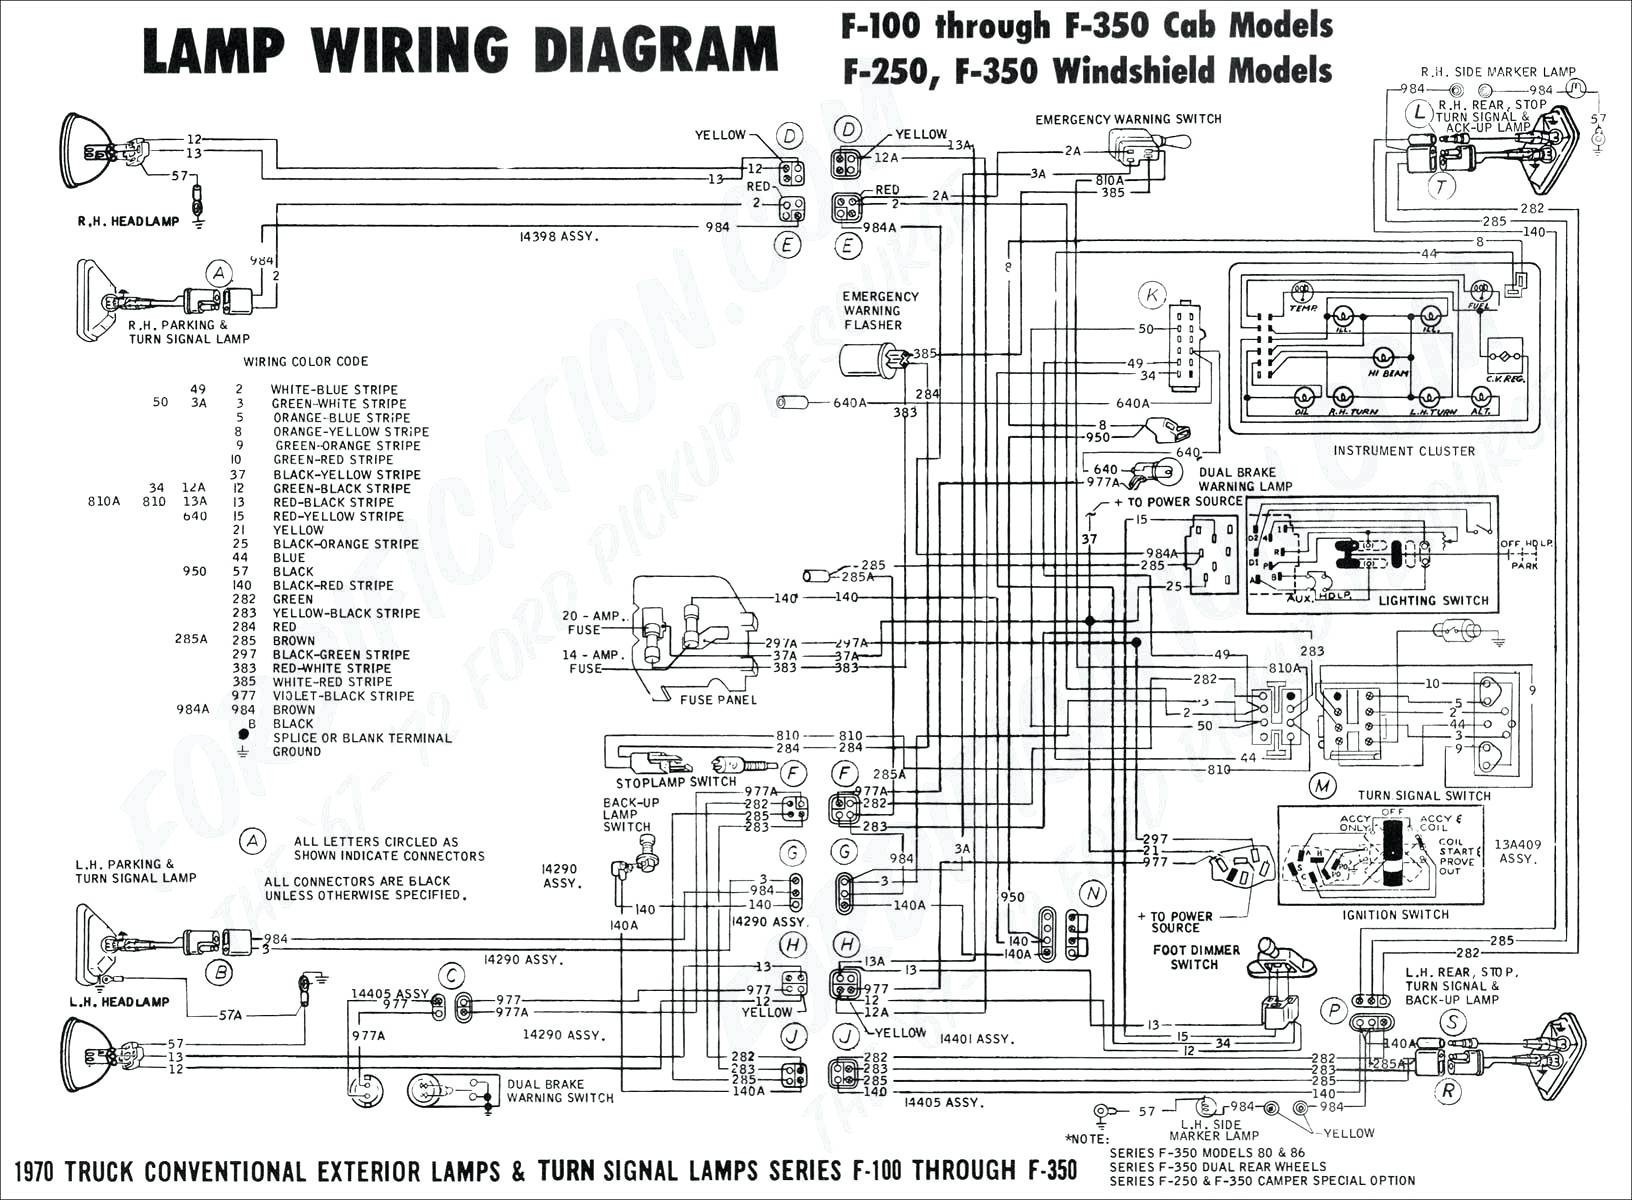 240z v8 wiring diagram wiring library rh 12 premium lose de 73 240Z Wiring Diagram 240Z Distributor Wiring